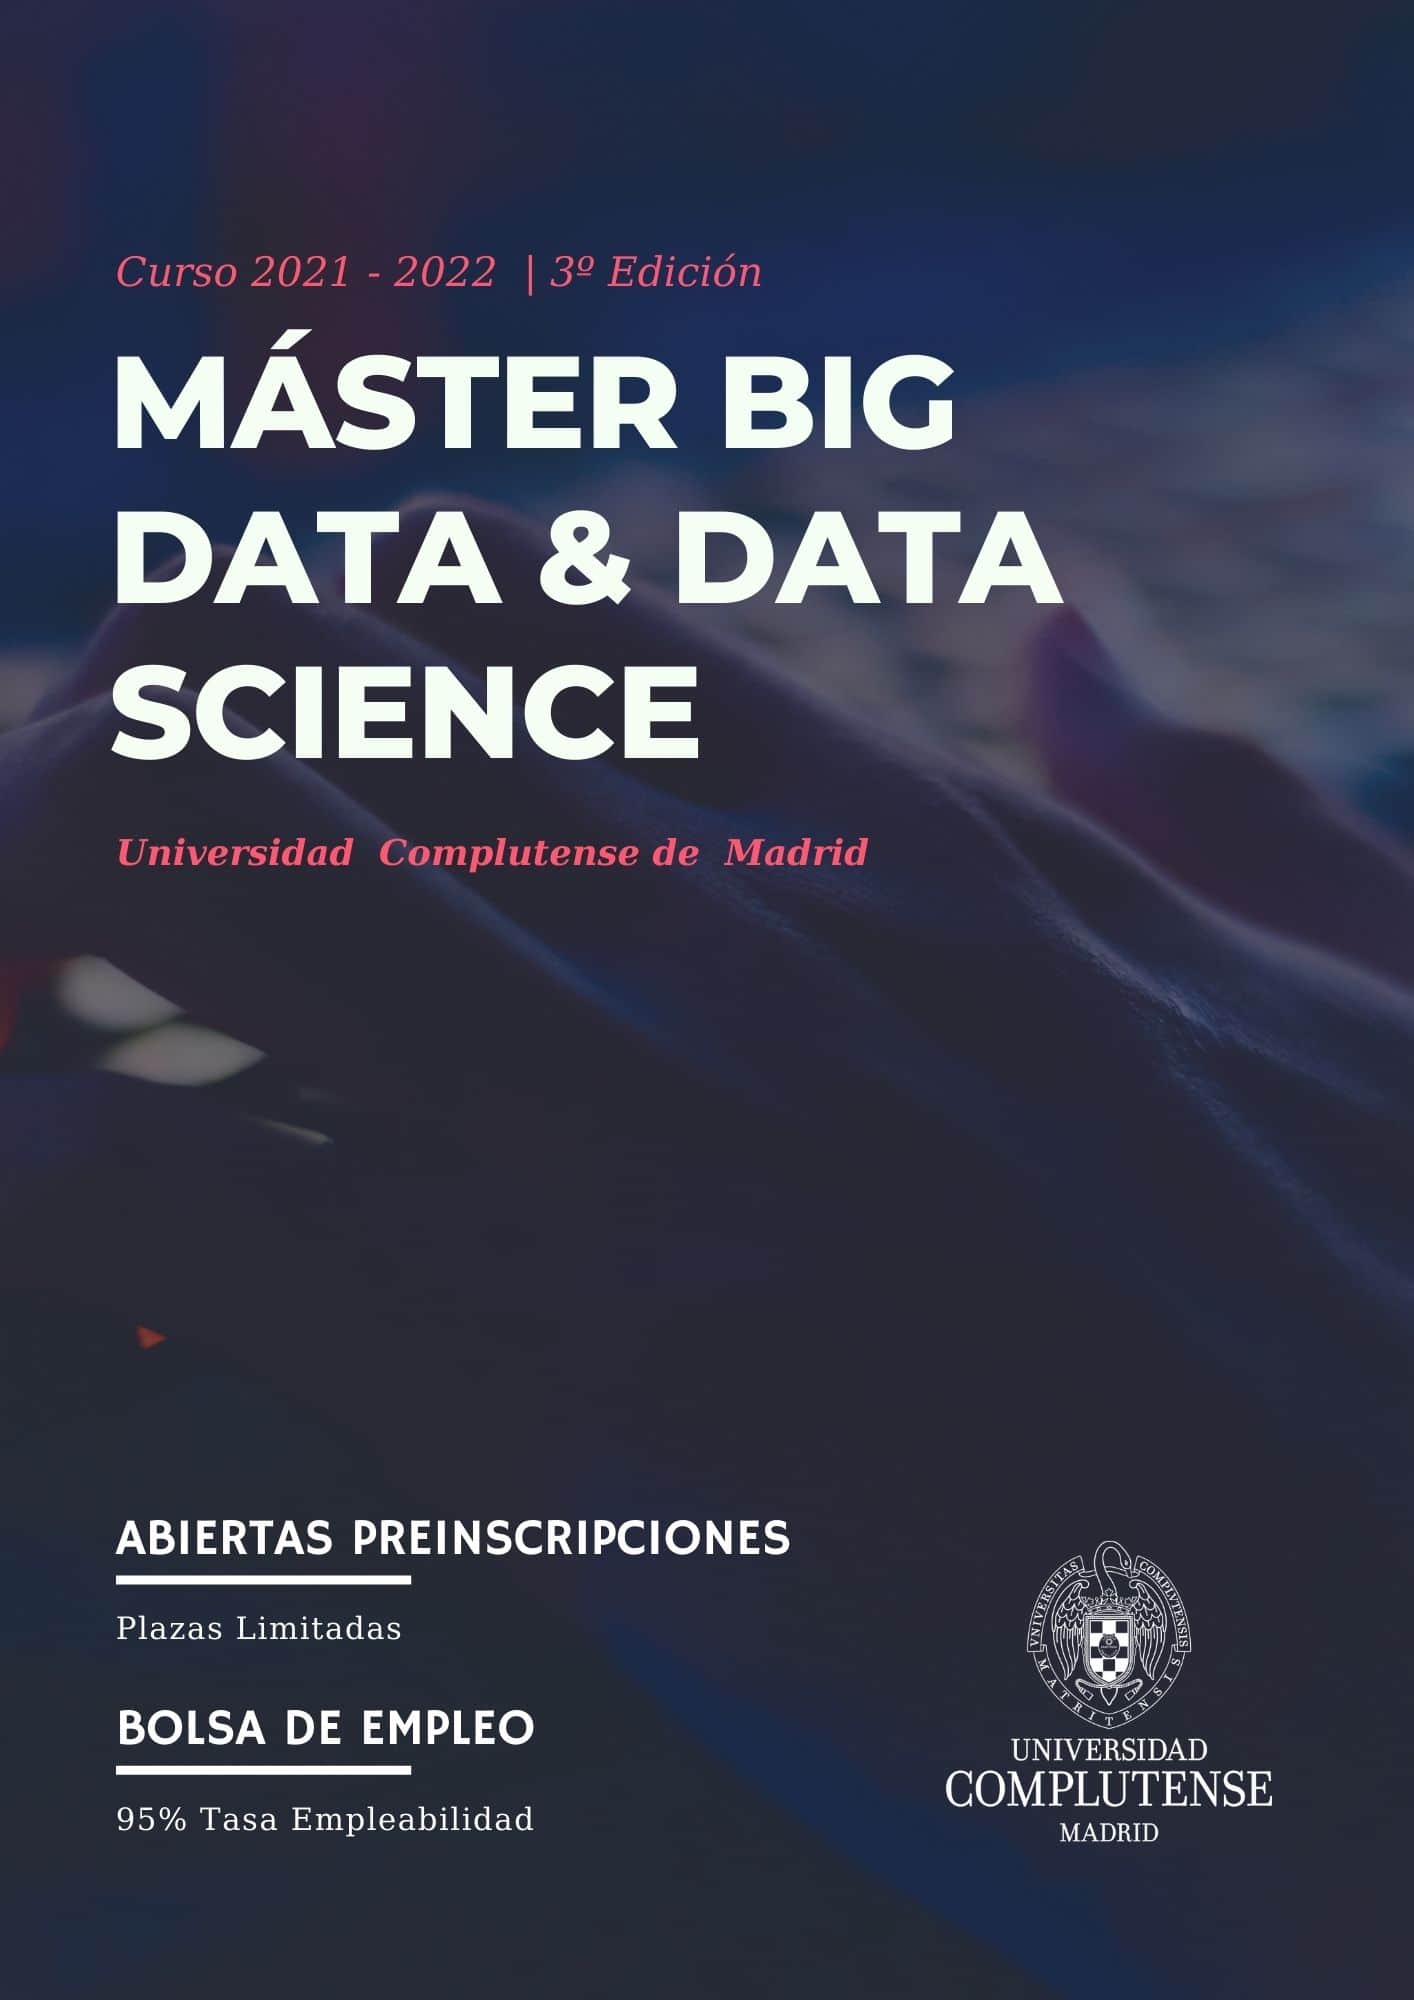 Master Data Science UCM 2021 2022